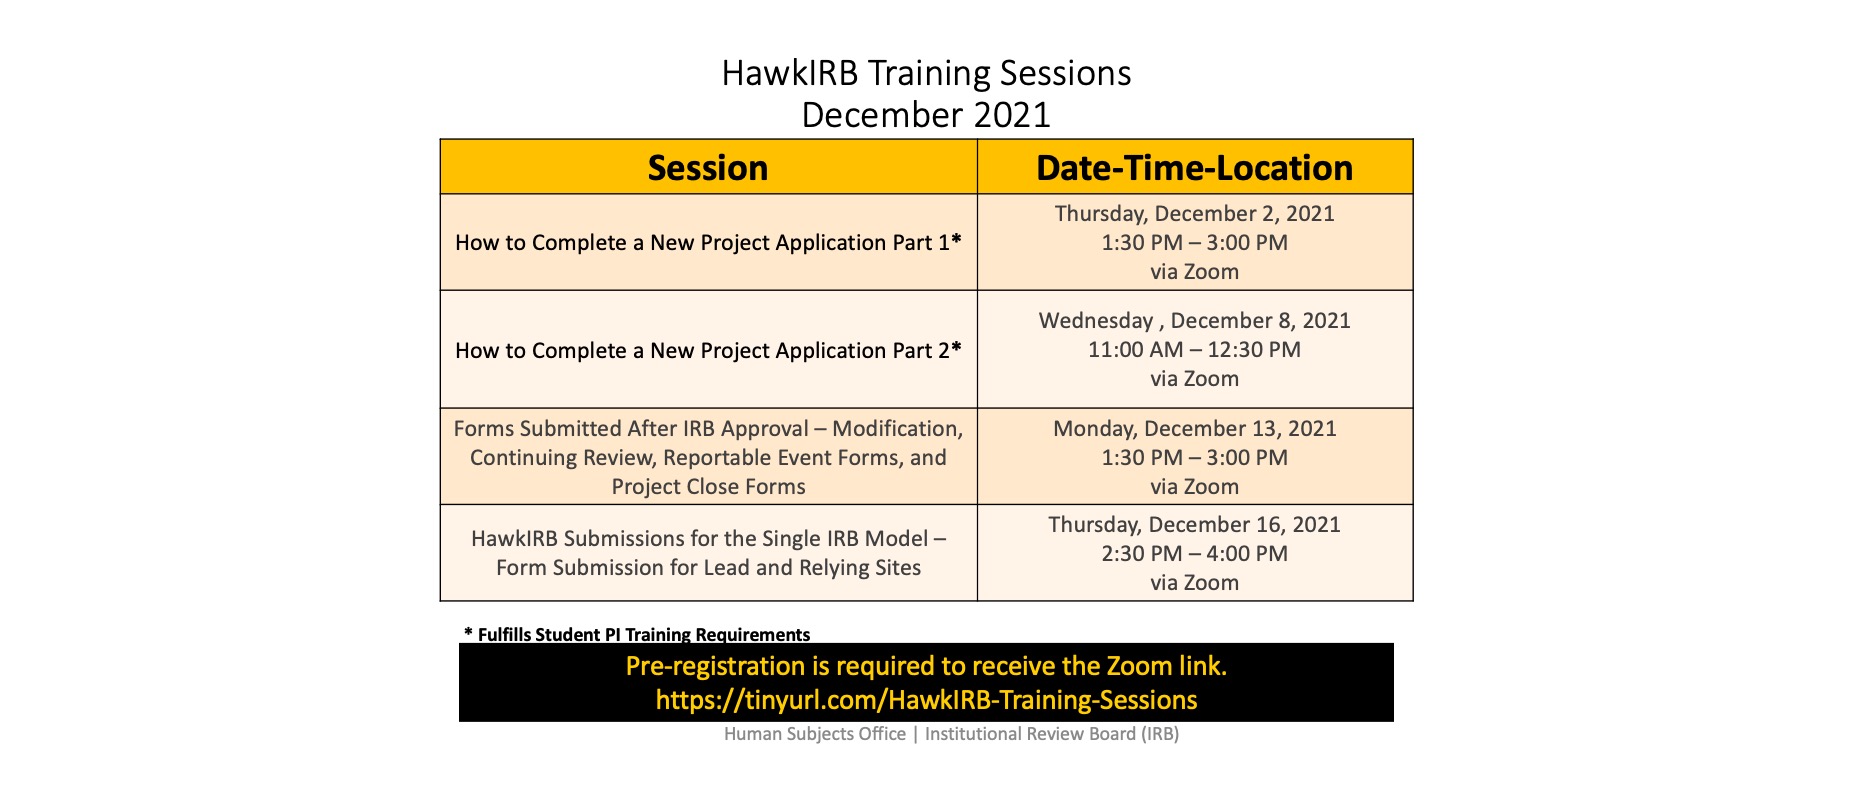 HawkIRB Training Sessions